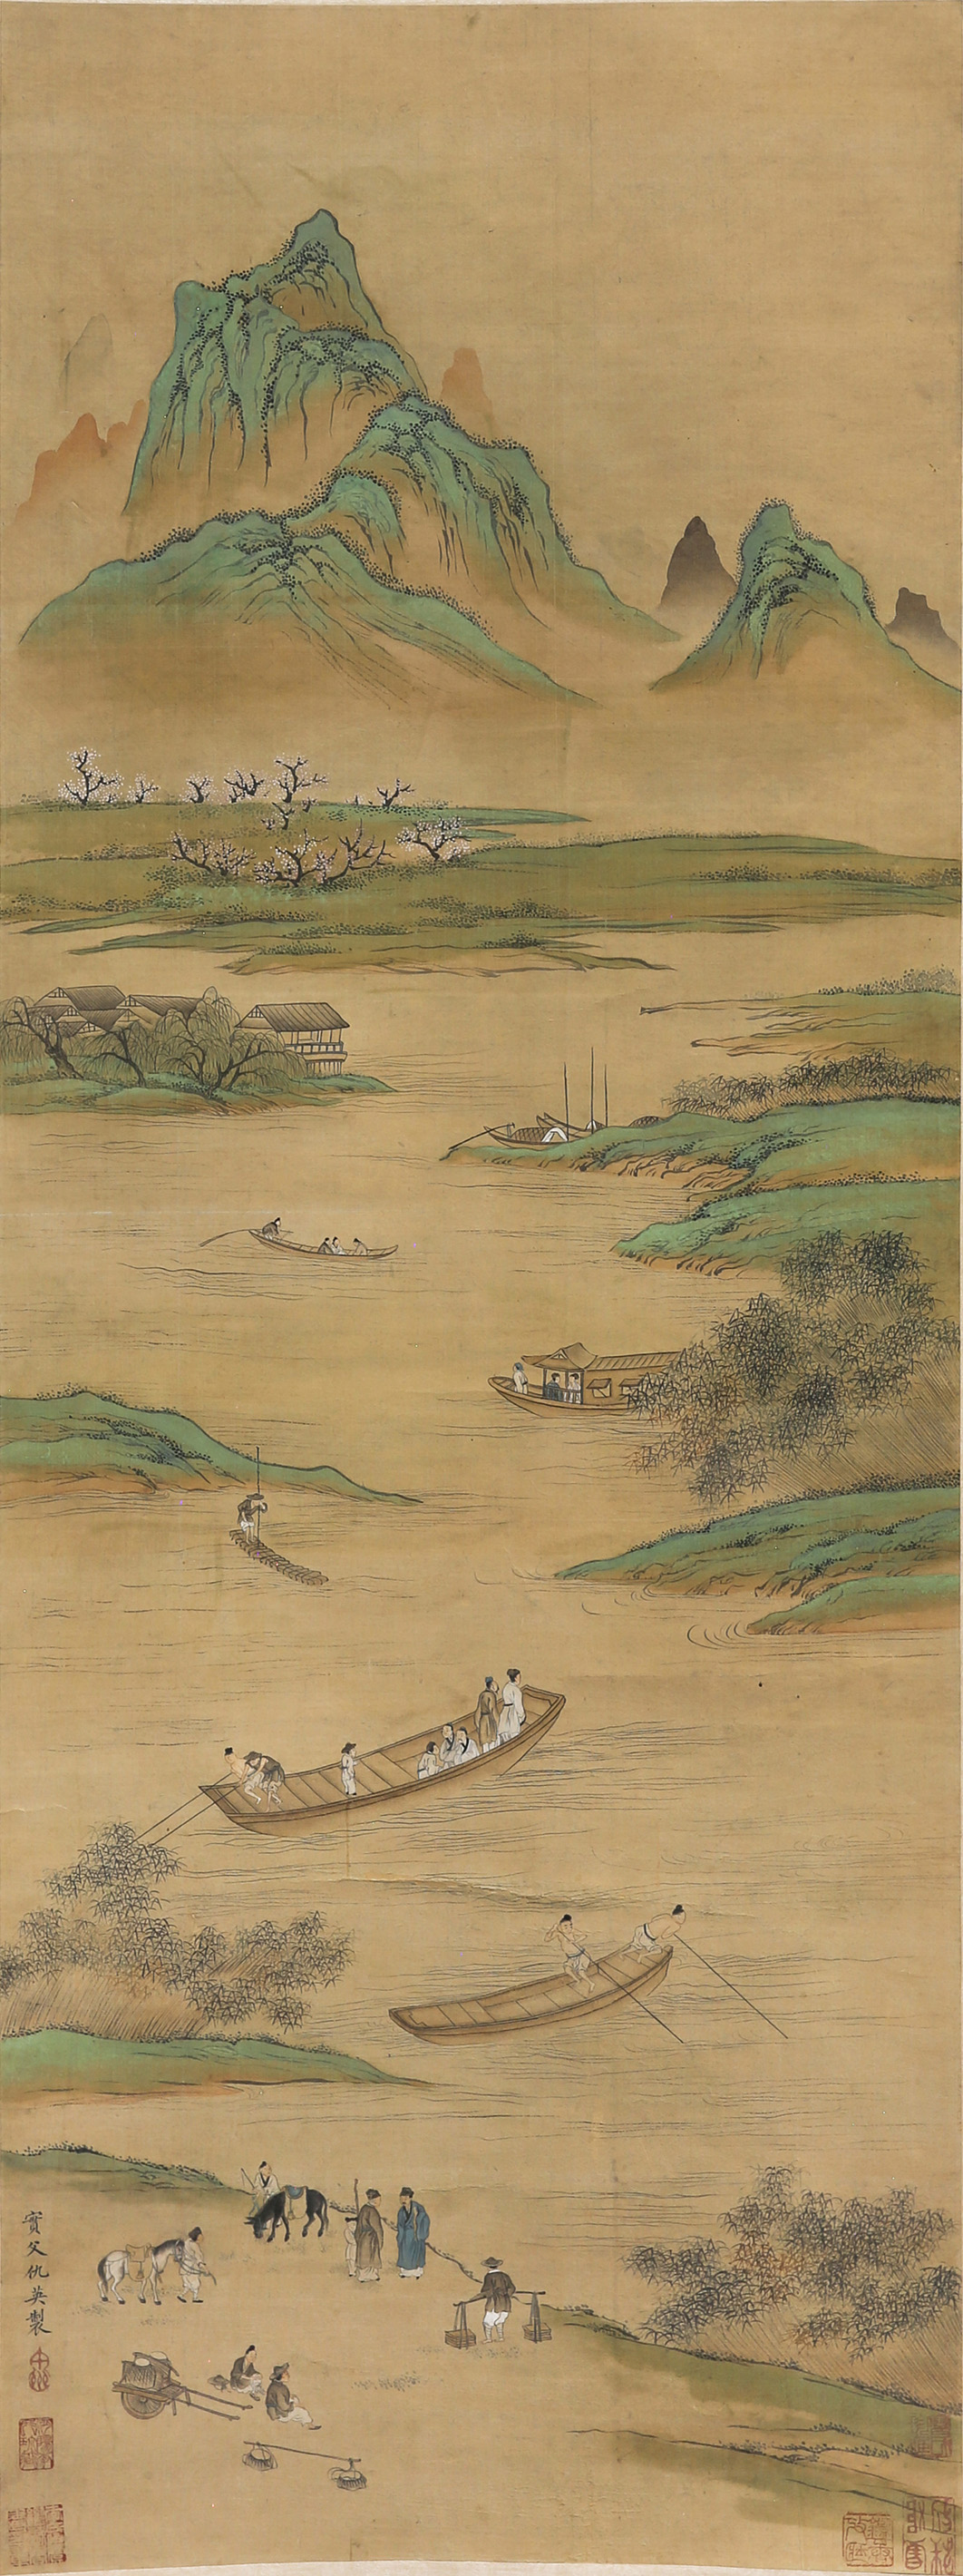 MANNER OF QIU YING (1494?-1552)